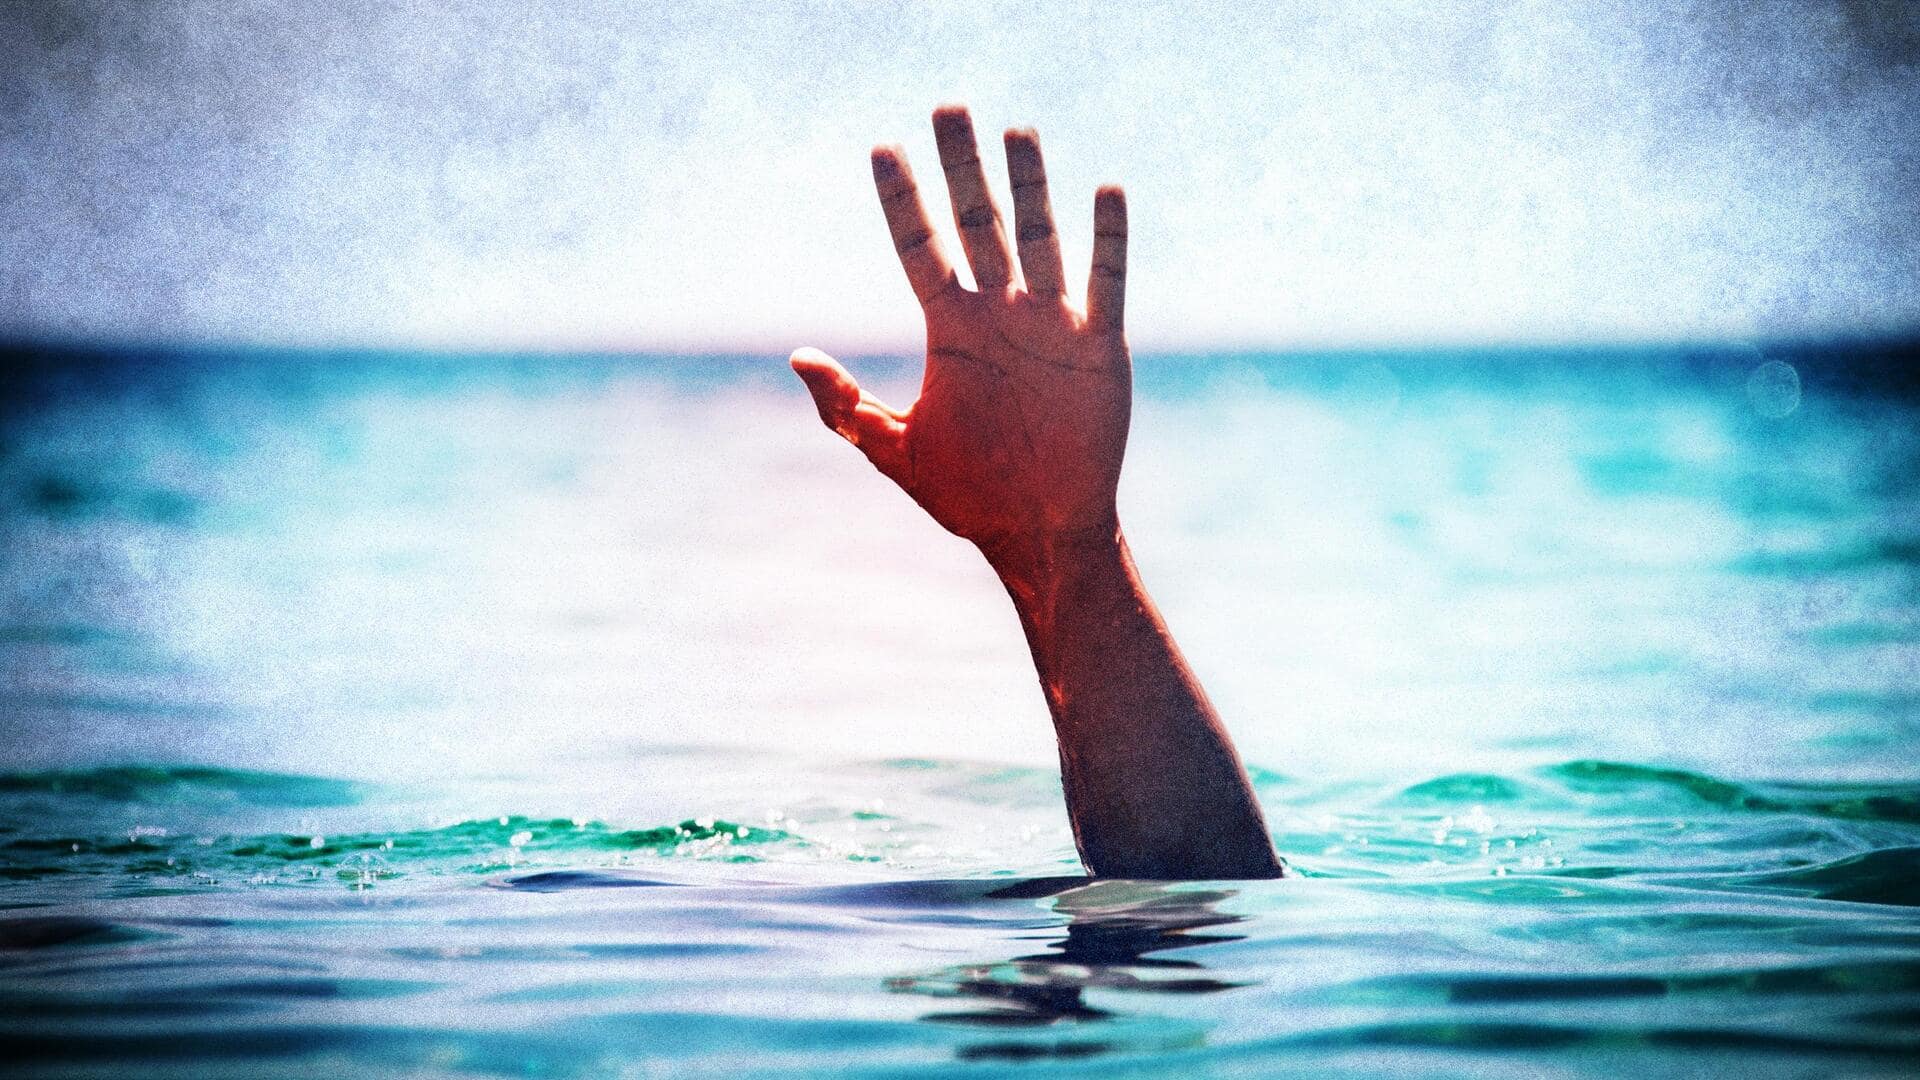 4 Indians drown at unpatrolled beach in Australia